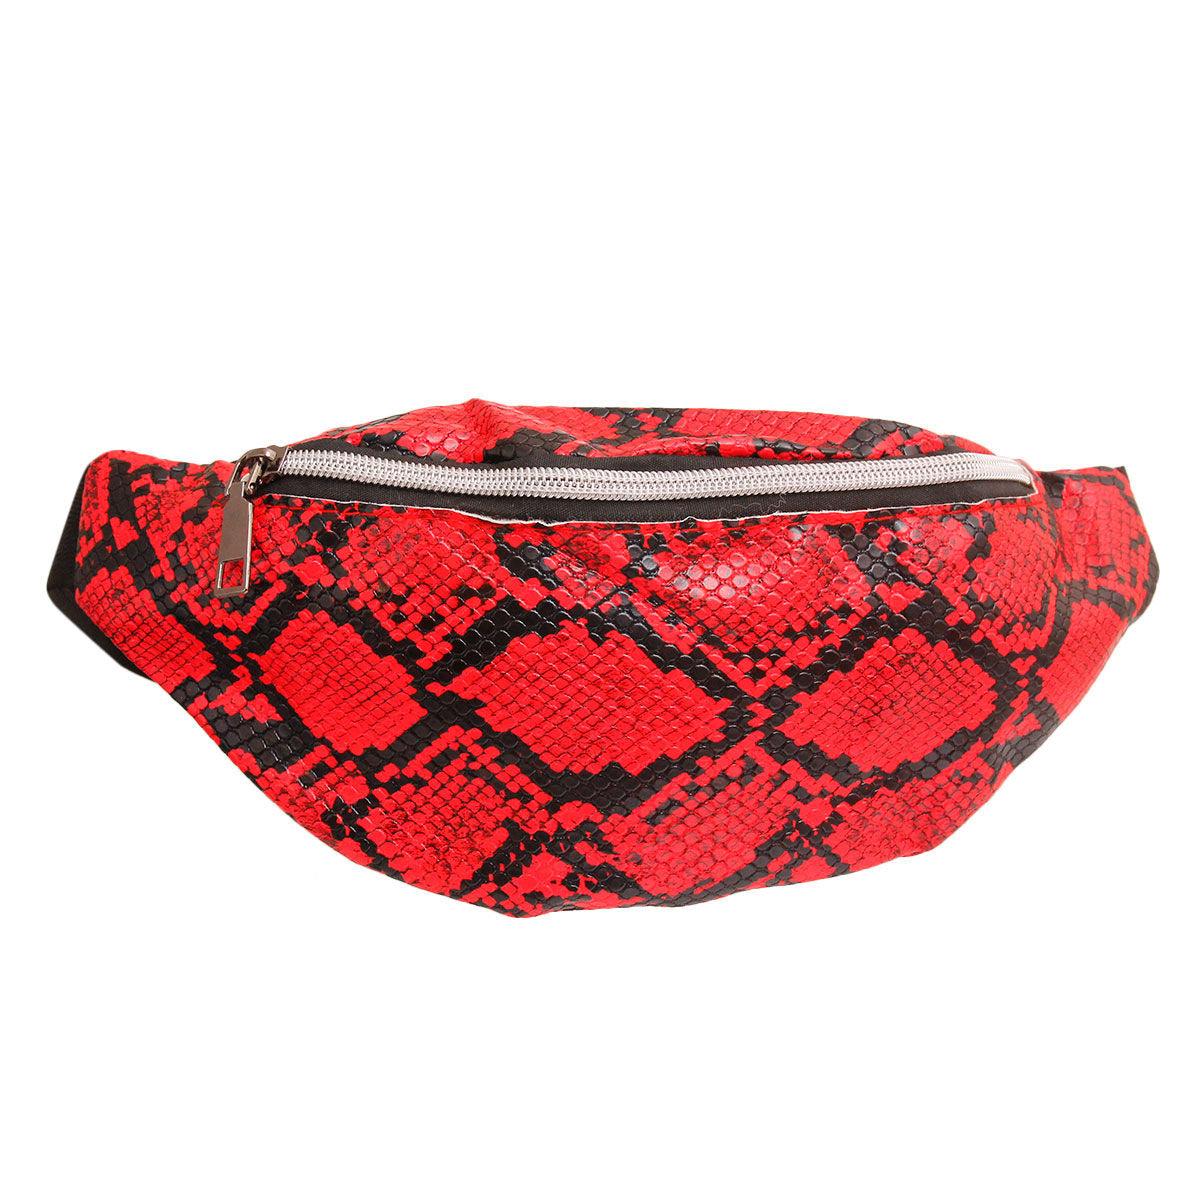 Red Faux Snake Skin Fanny Pack Waist Bag